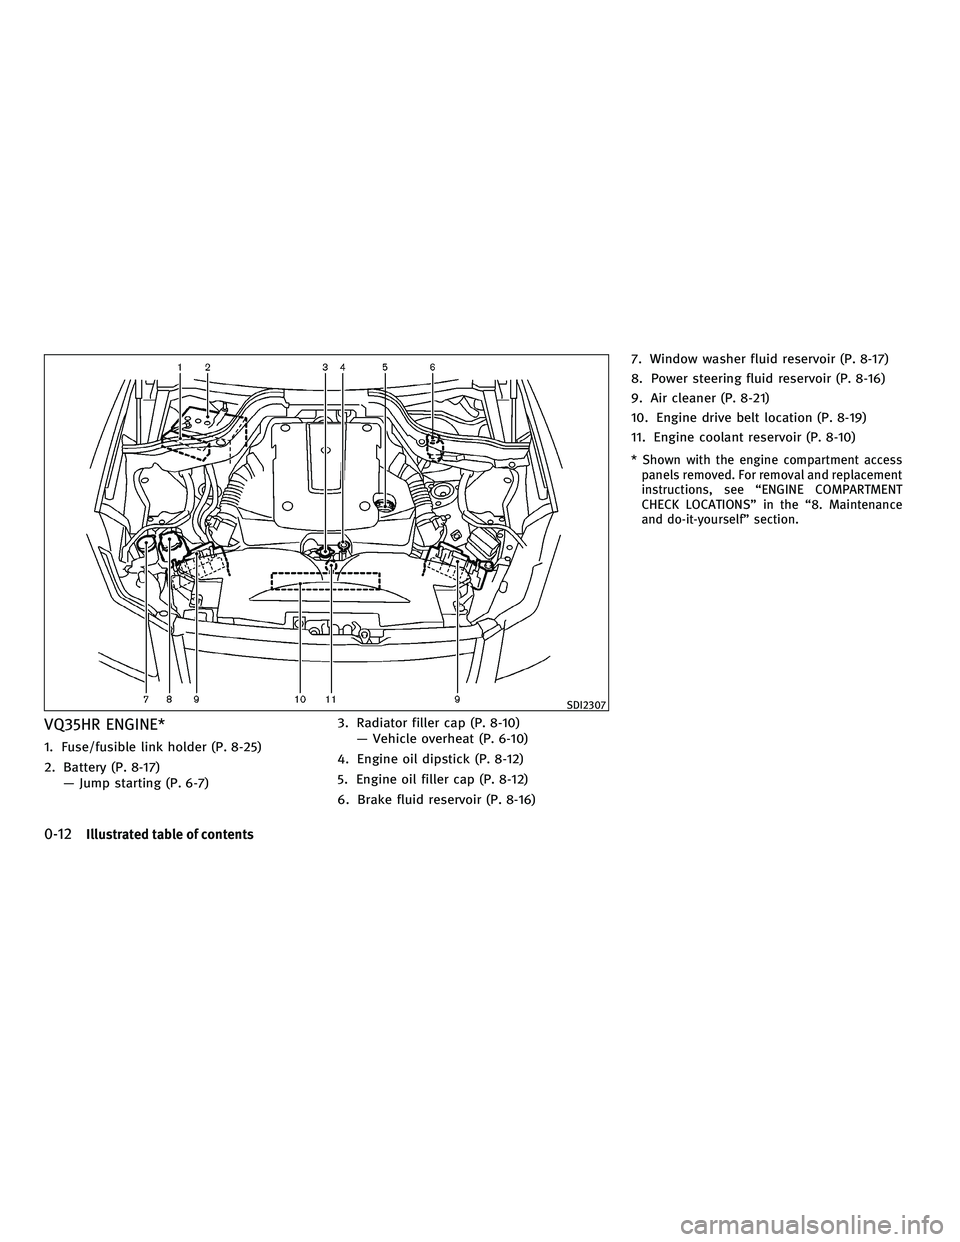 INFINITI M 2010  Owners Manual VQ35HR ENGINE*
1. Fuse/fusible link holder (P. 8-25)
2. Battery (P. 8-17)Ð Jump starting (P. 6-7) 3. Radiator filler cap (P. 8-10)
Ð Vehicle overheat (P. 6-10)
4. Engine oil dipstick (P. 8-12)
5. En